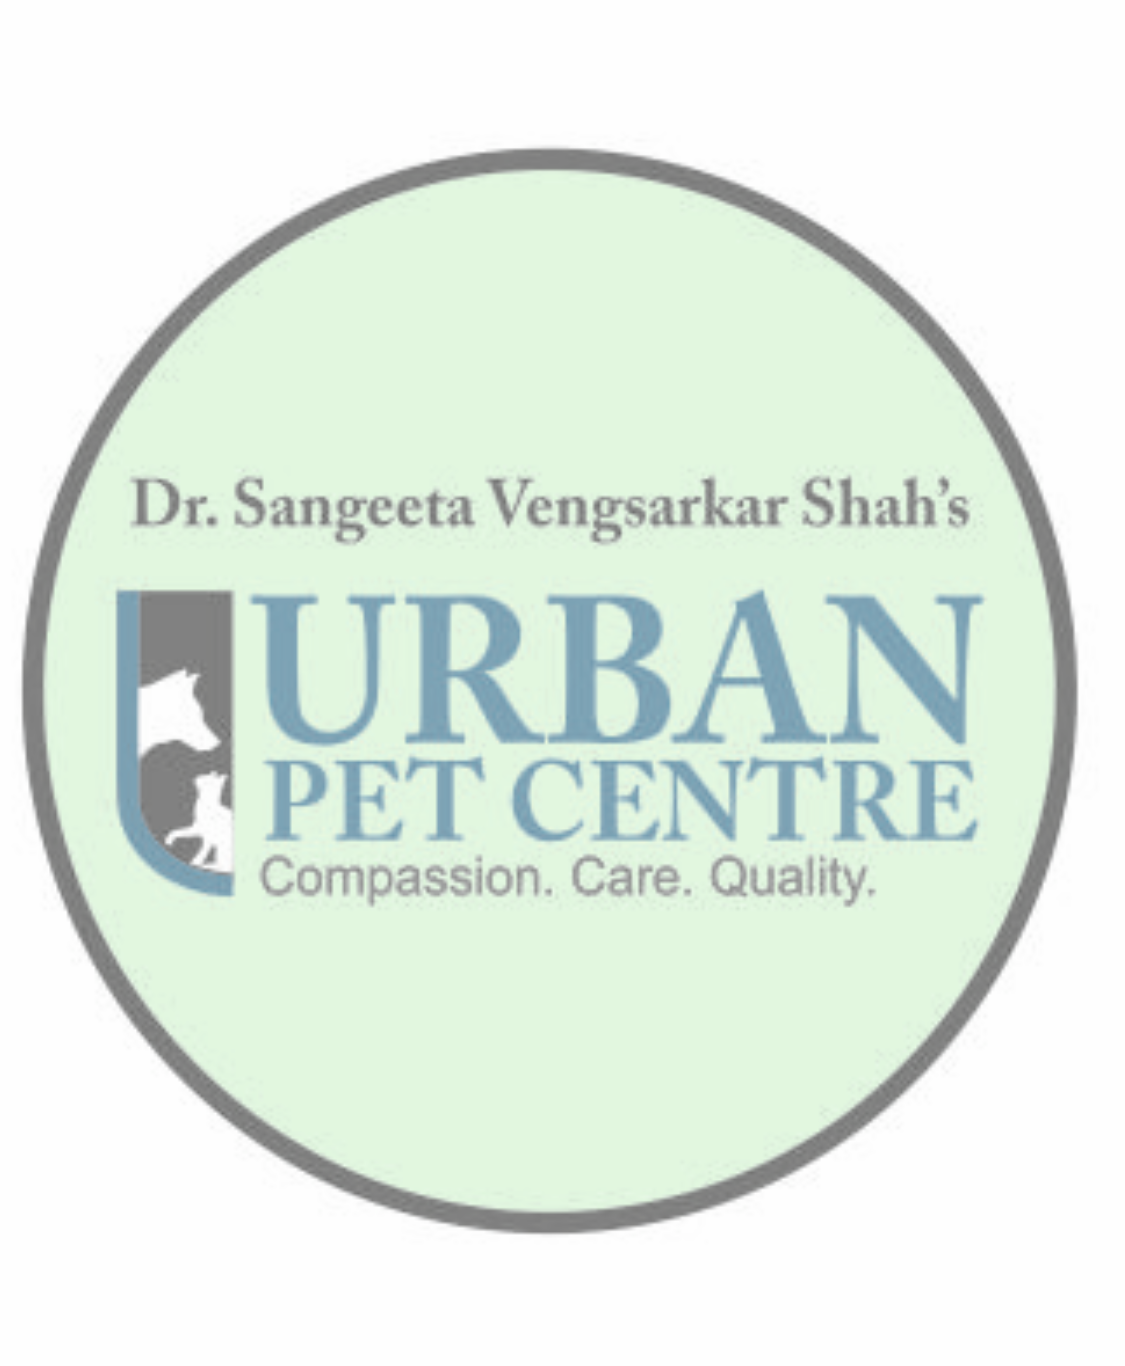 Urban Pet Centre|Veterinary|Medical Services